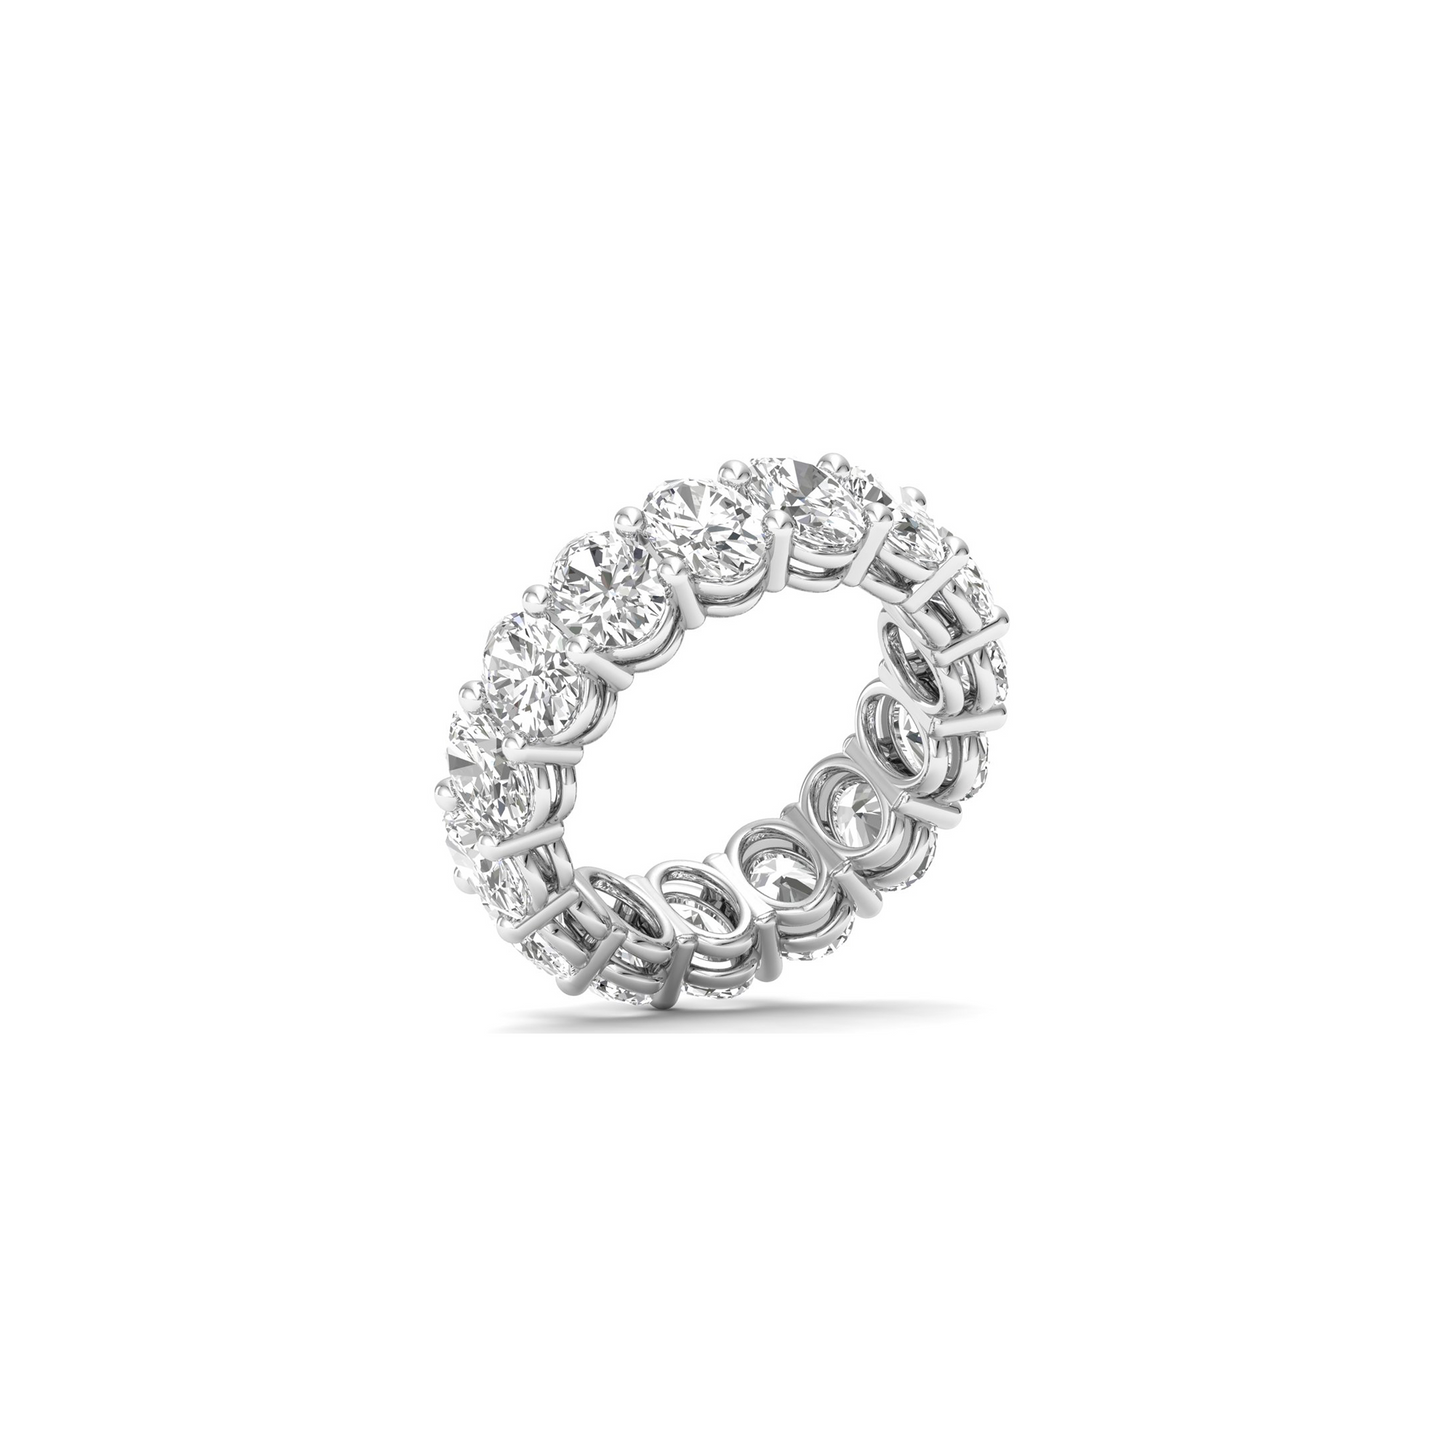 Oval Opulence: Lab Grown Diamond Ring in Elegantly Timeless Oval Shape